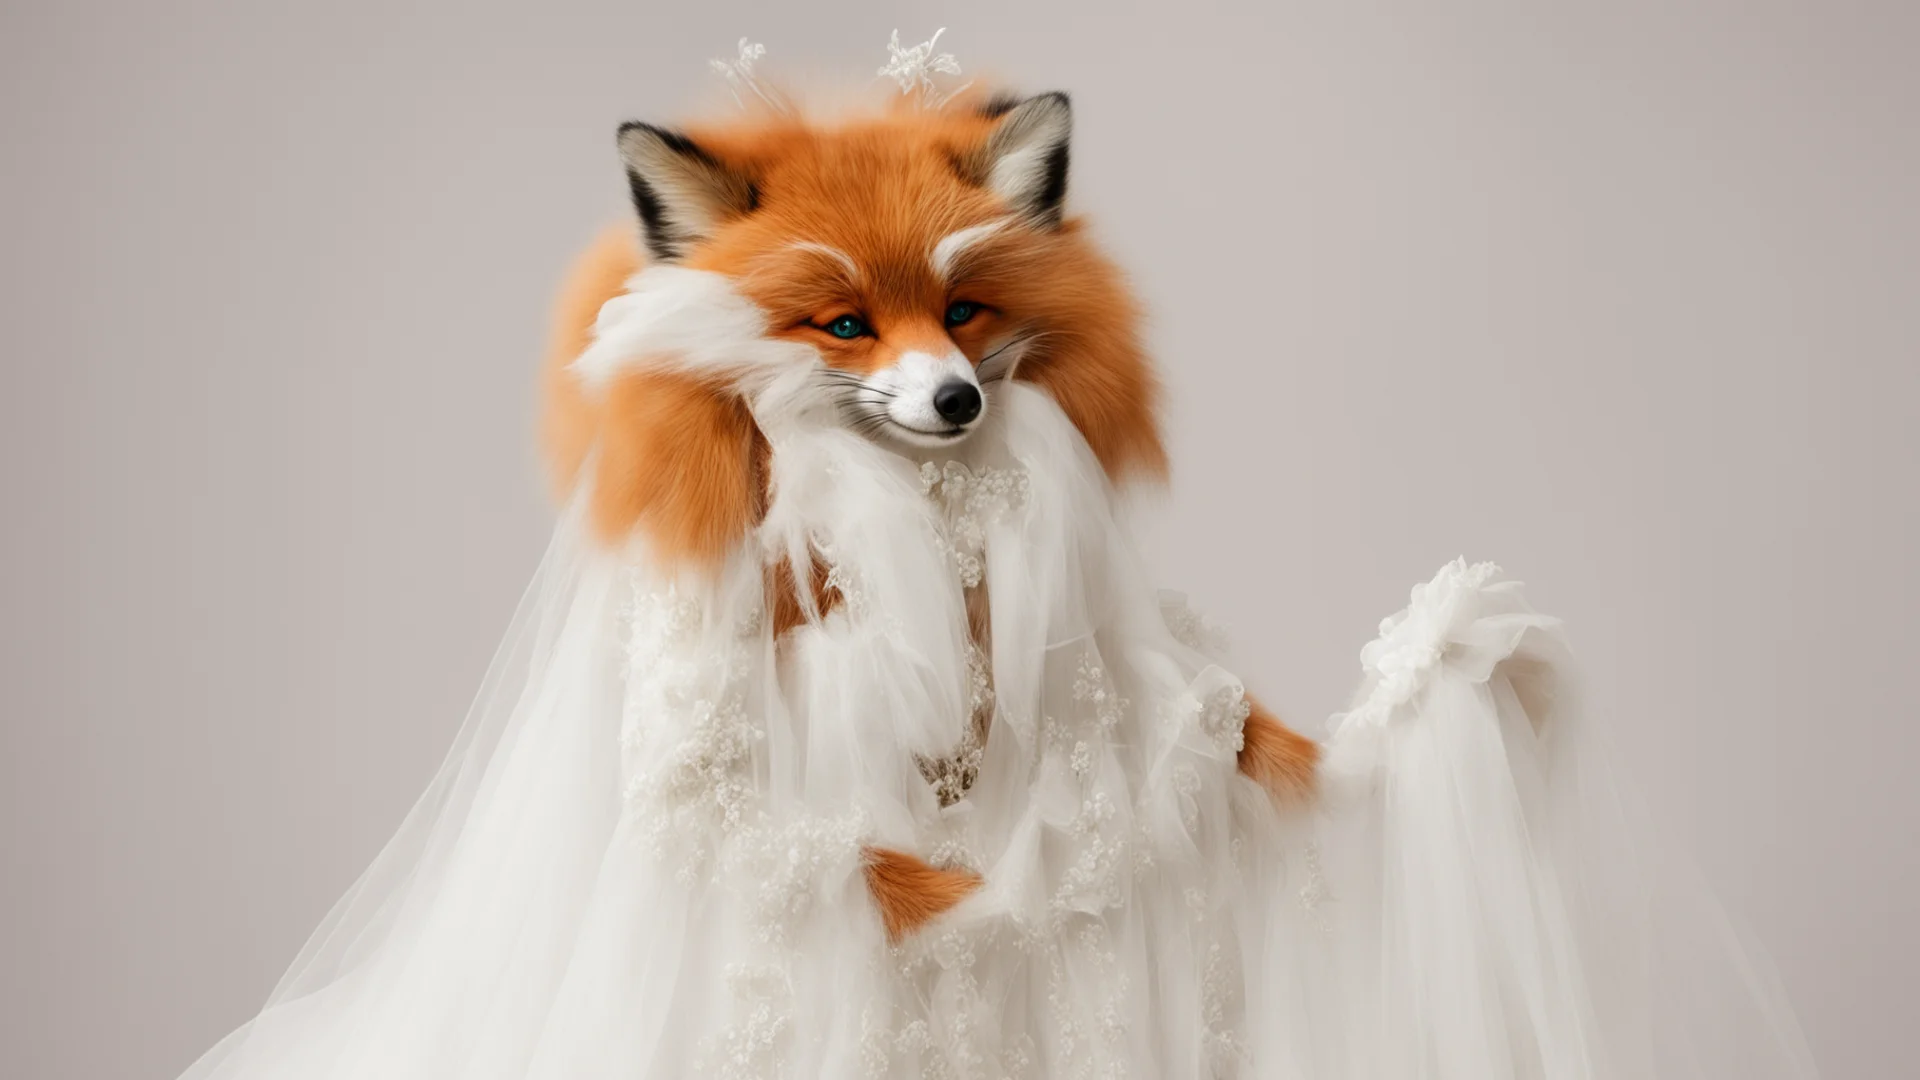 aiamazing fox furry bride awesome portrait 2 wide